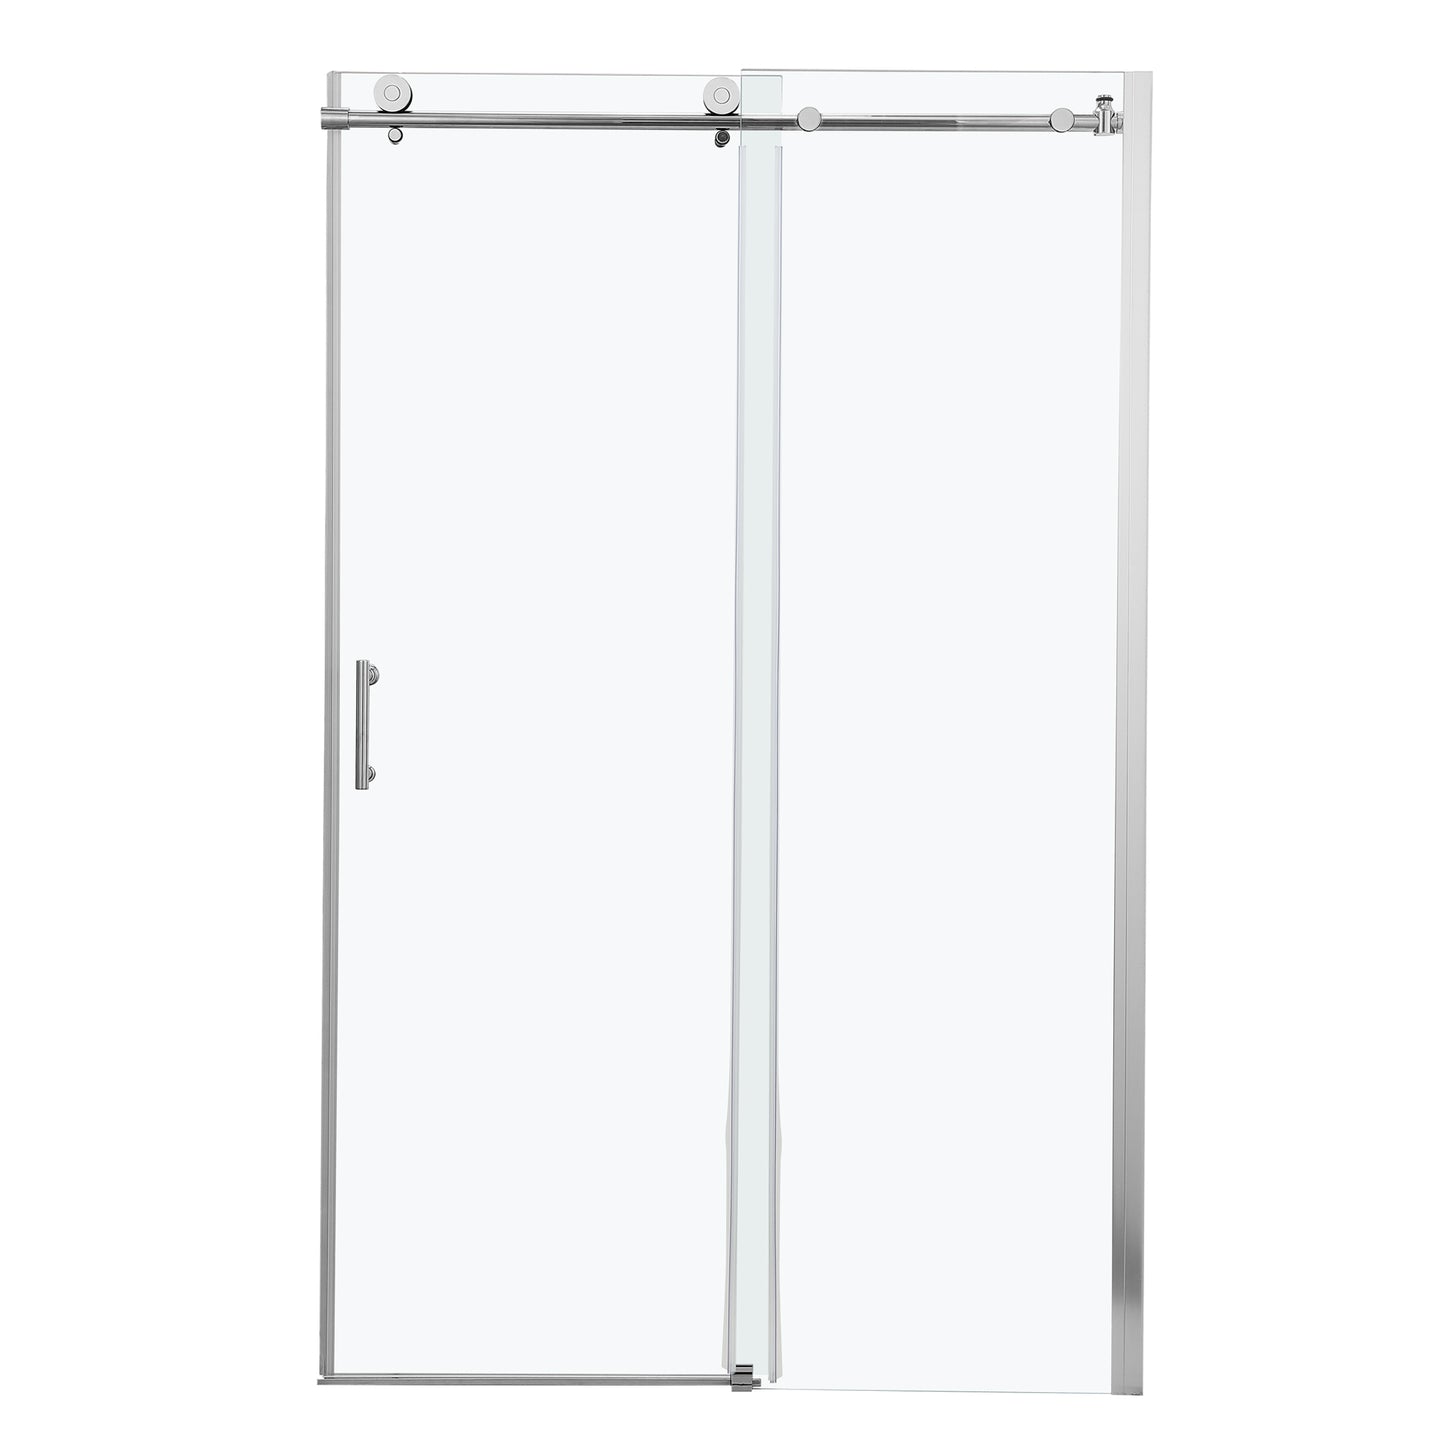 Shower Door 48" W x 76"H Single Sliding Bypass Shower Enclosure,Chrome